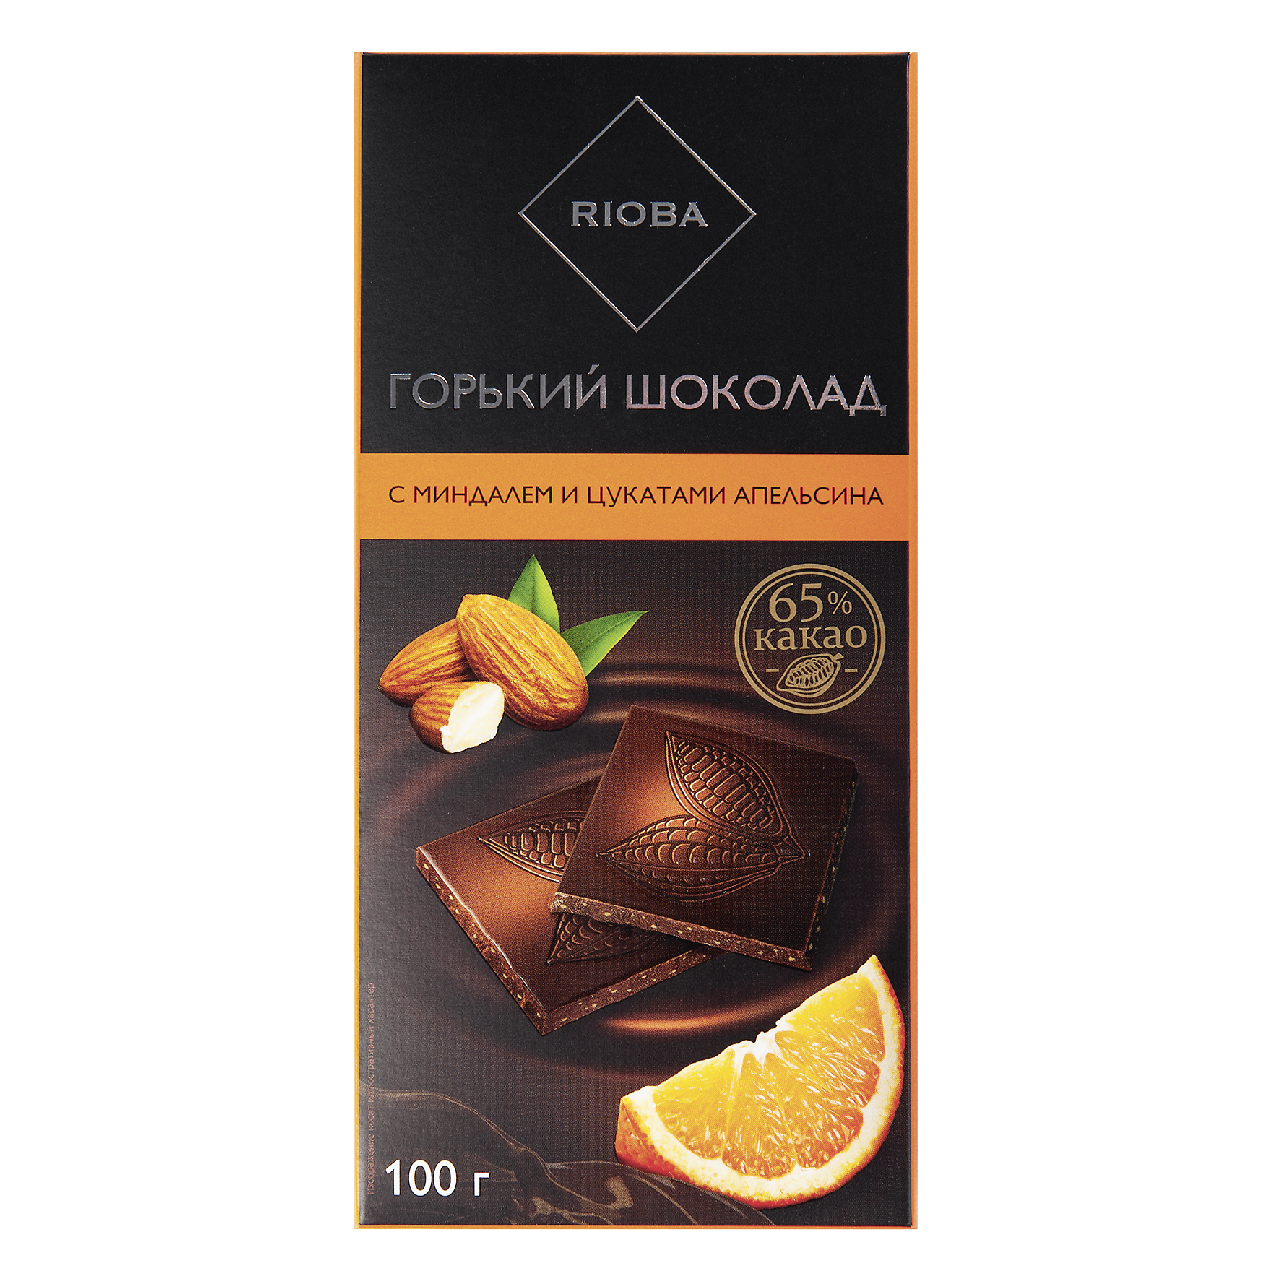 Горький шоколад с миндалем. Горький шоколад Rioba. Горький шоколад Rioba 72%. Rioba шоколад Горький миндаль, цукаты, апельсин, 100г. Rioba Горький шоколад плитка.